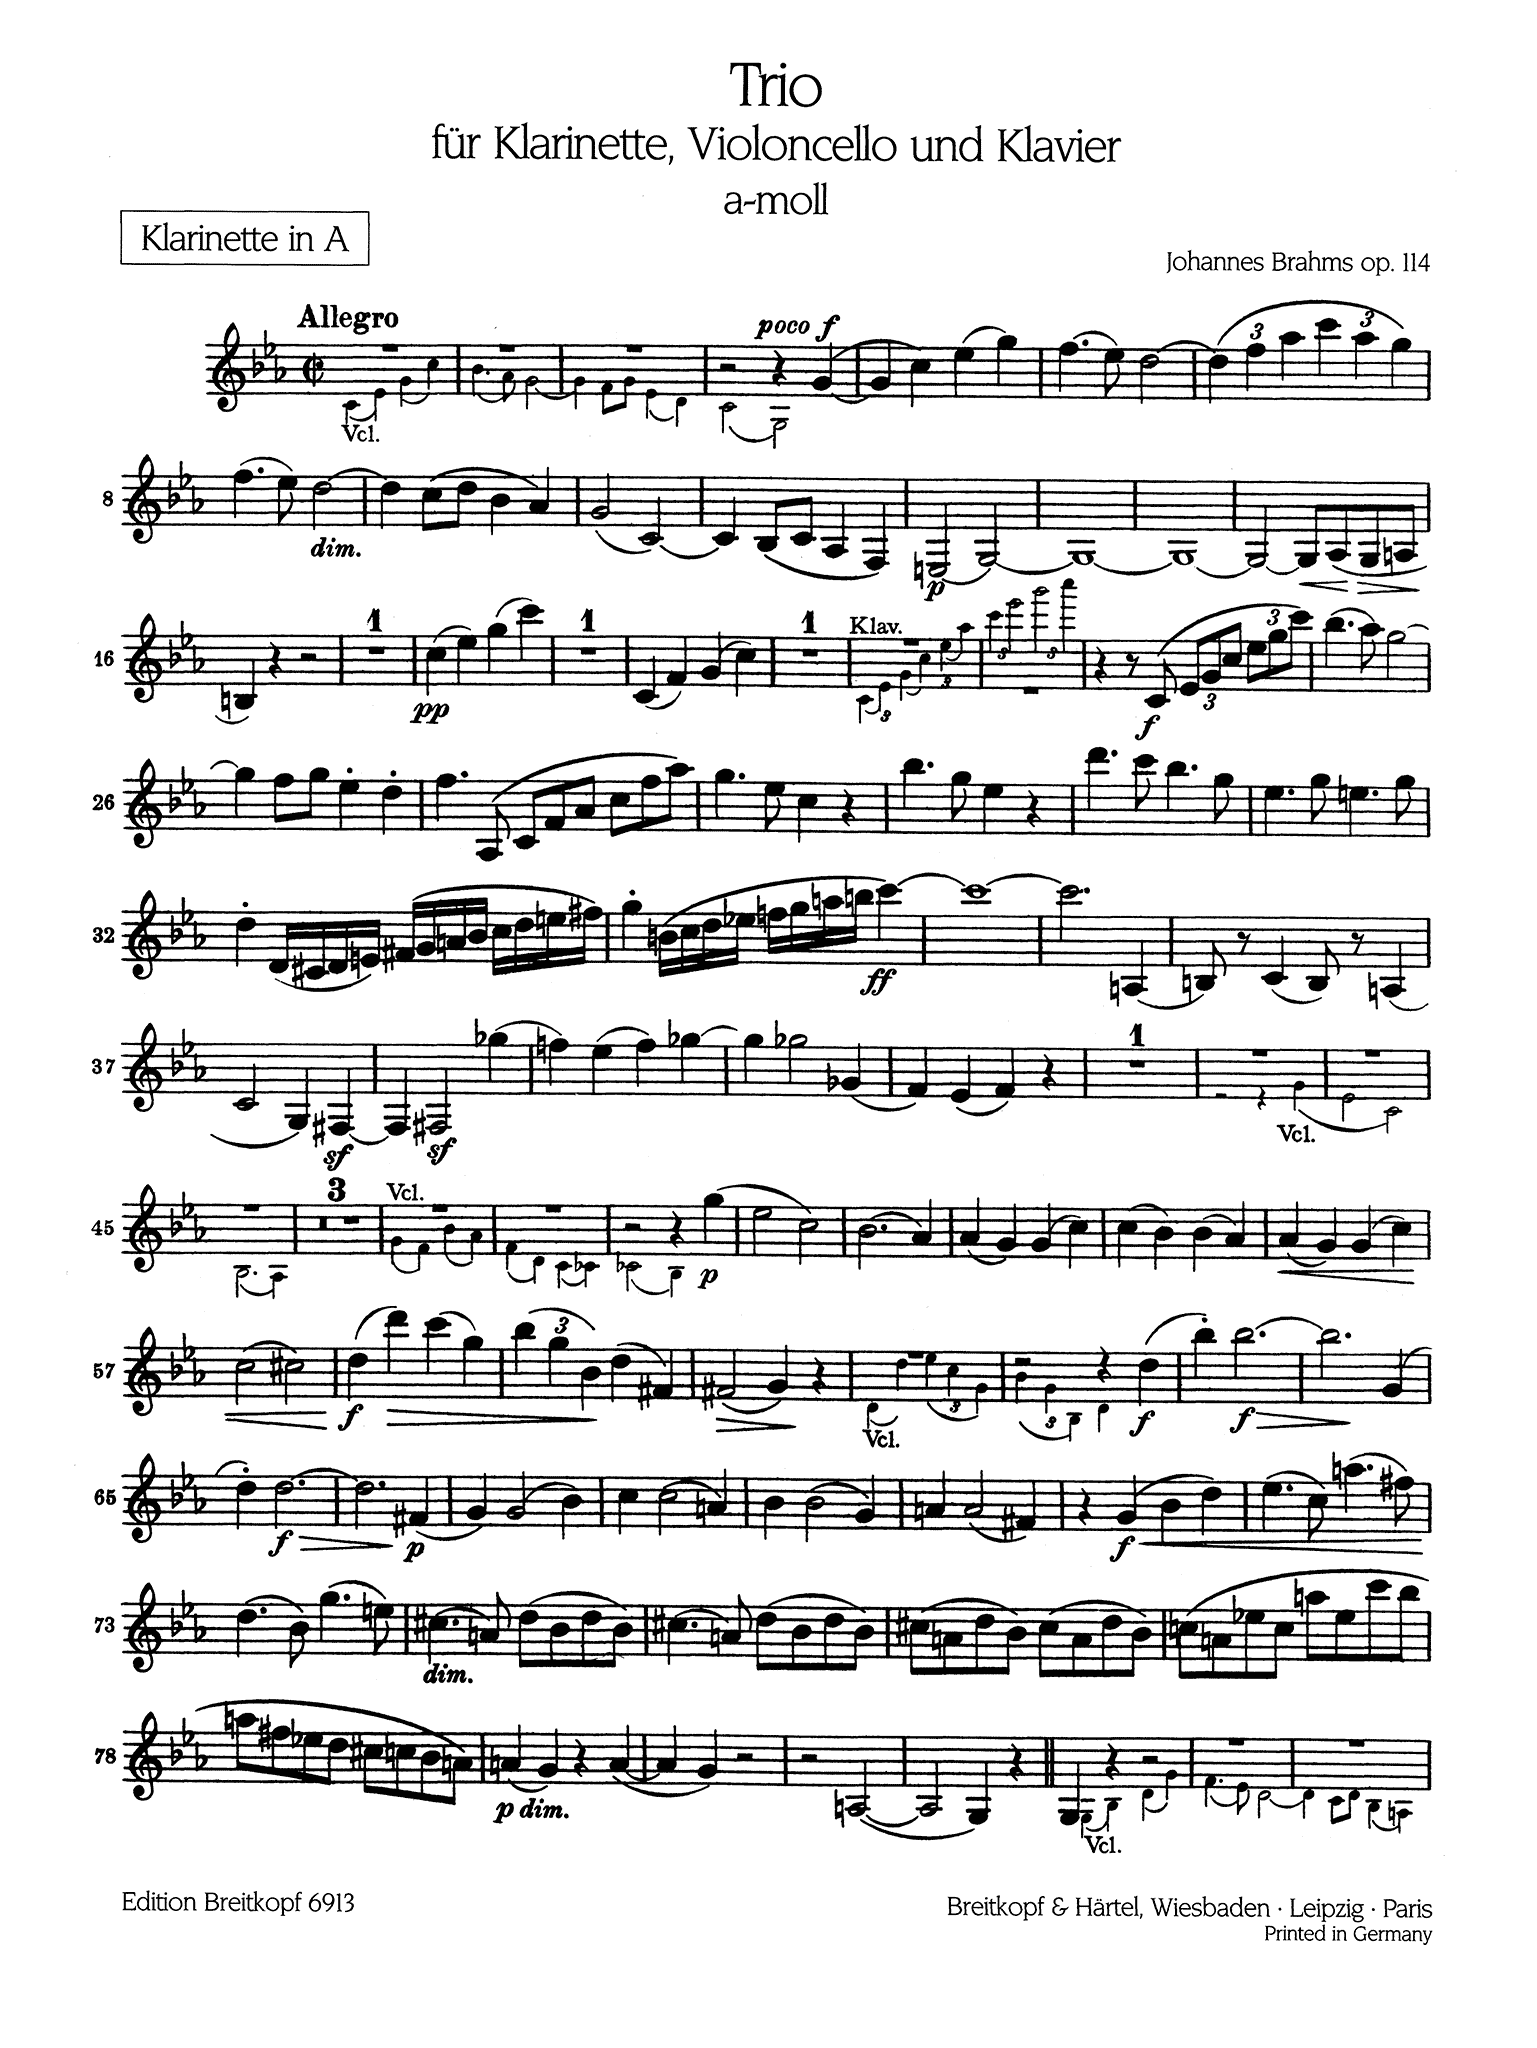 Clarinet Trio in A Minor, Op. 114 Clarinet part